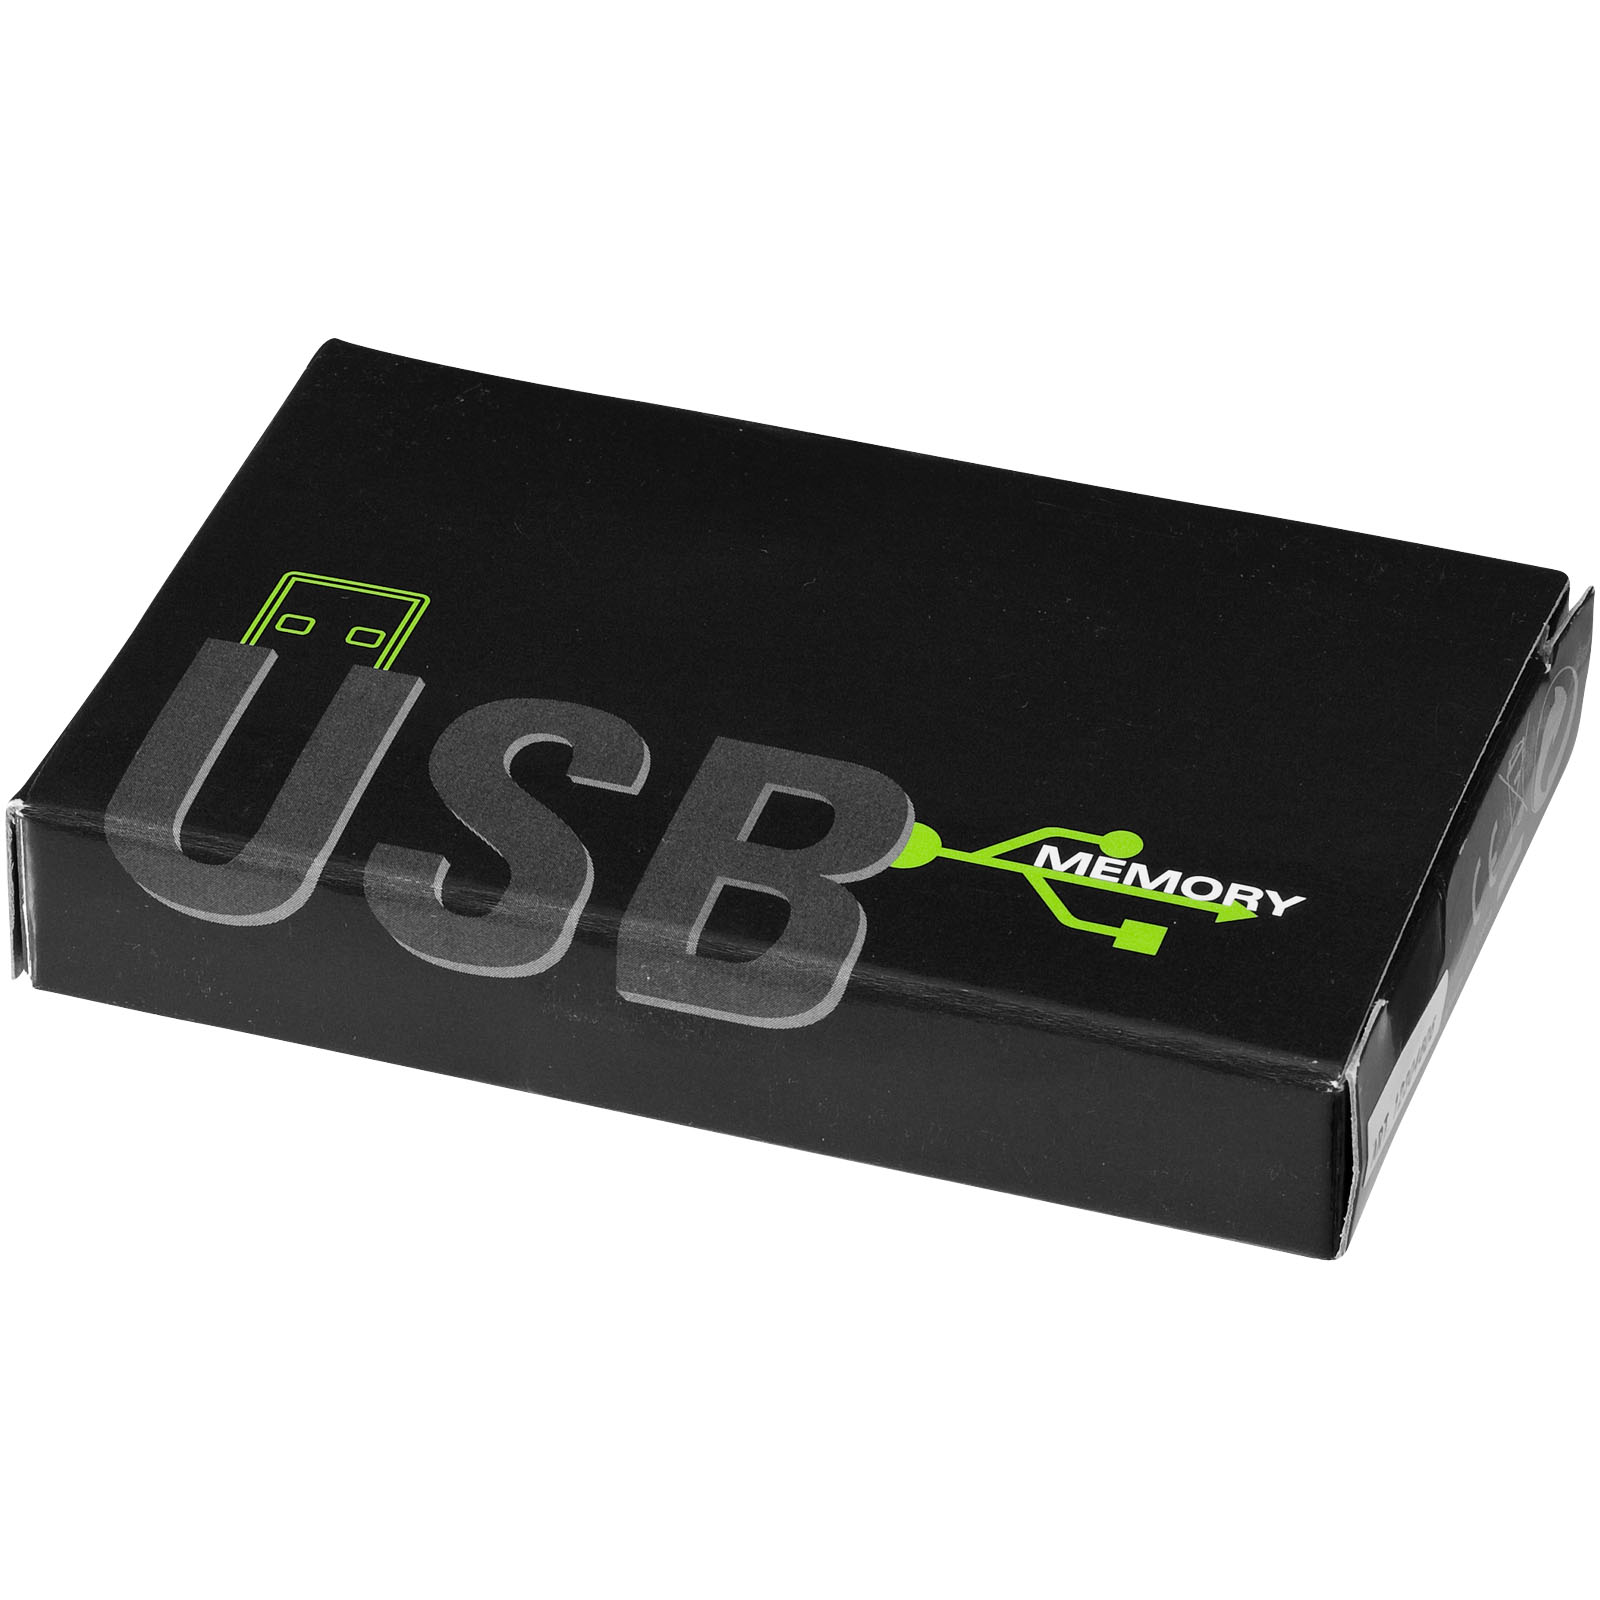 Advertising USB Flash Drives - Slim card-shaped 2GB USB flash drive - 1